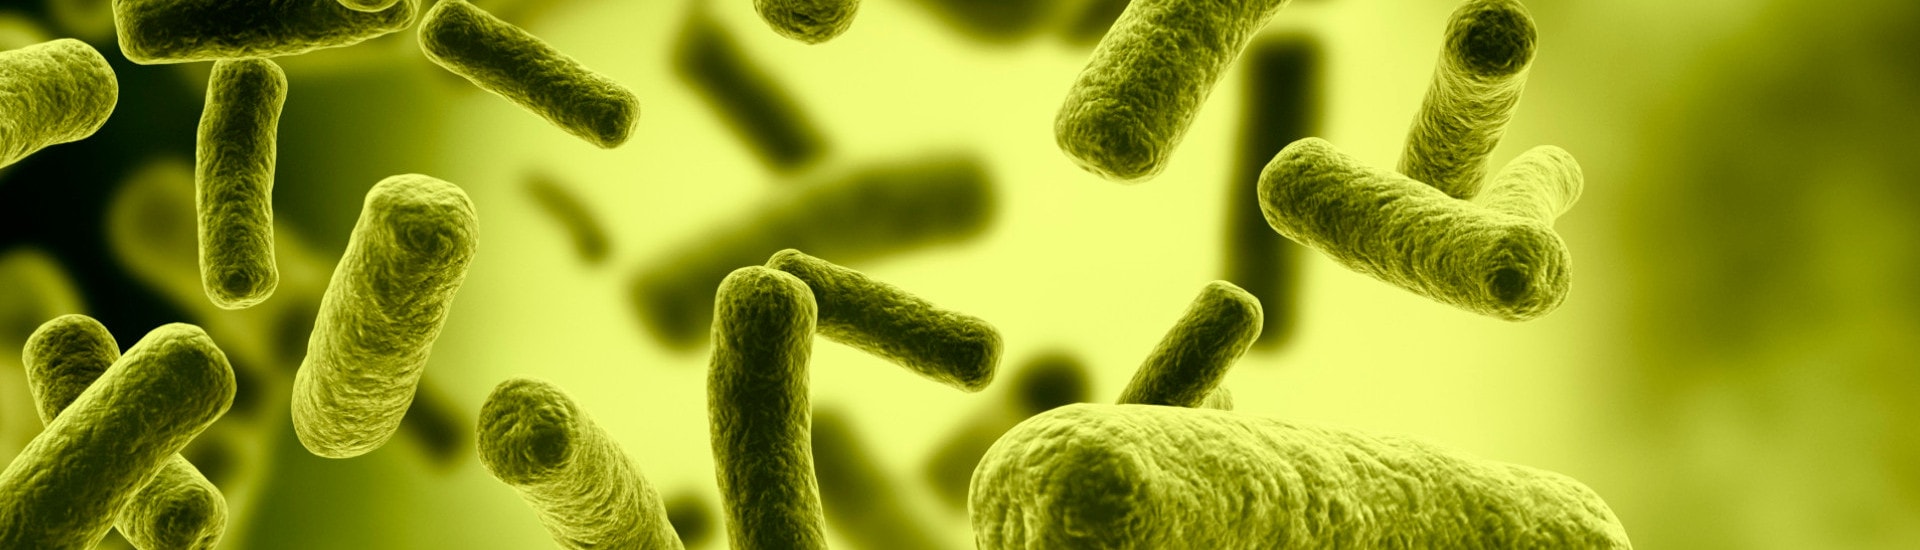 bacterias-min